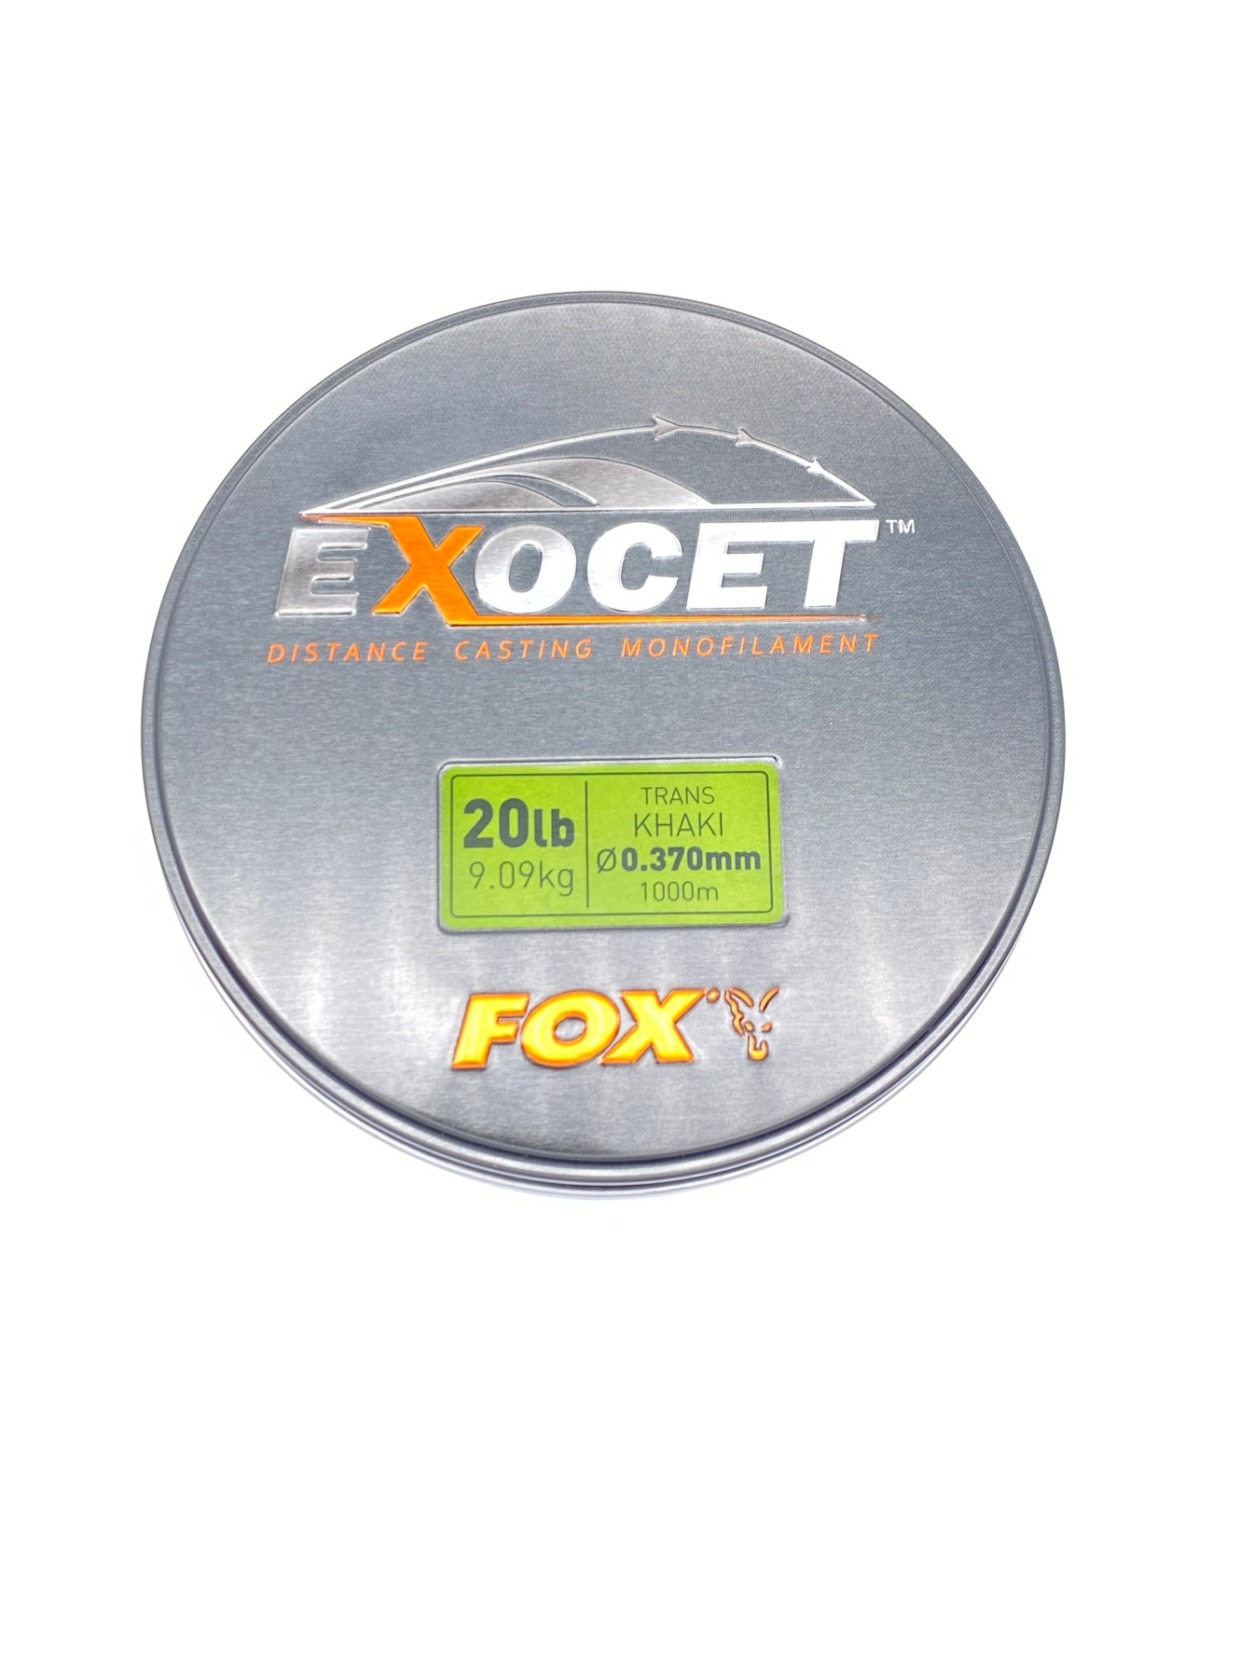 FOX EXOCETﾓﾉﾌｨﾗﾒﾝﾄ 1000M 20lb 0.37mm ﾄﾗﾝｽｶｰｷ